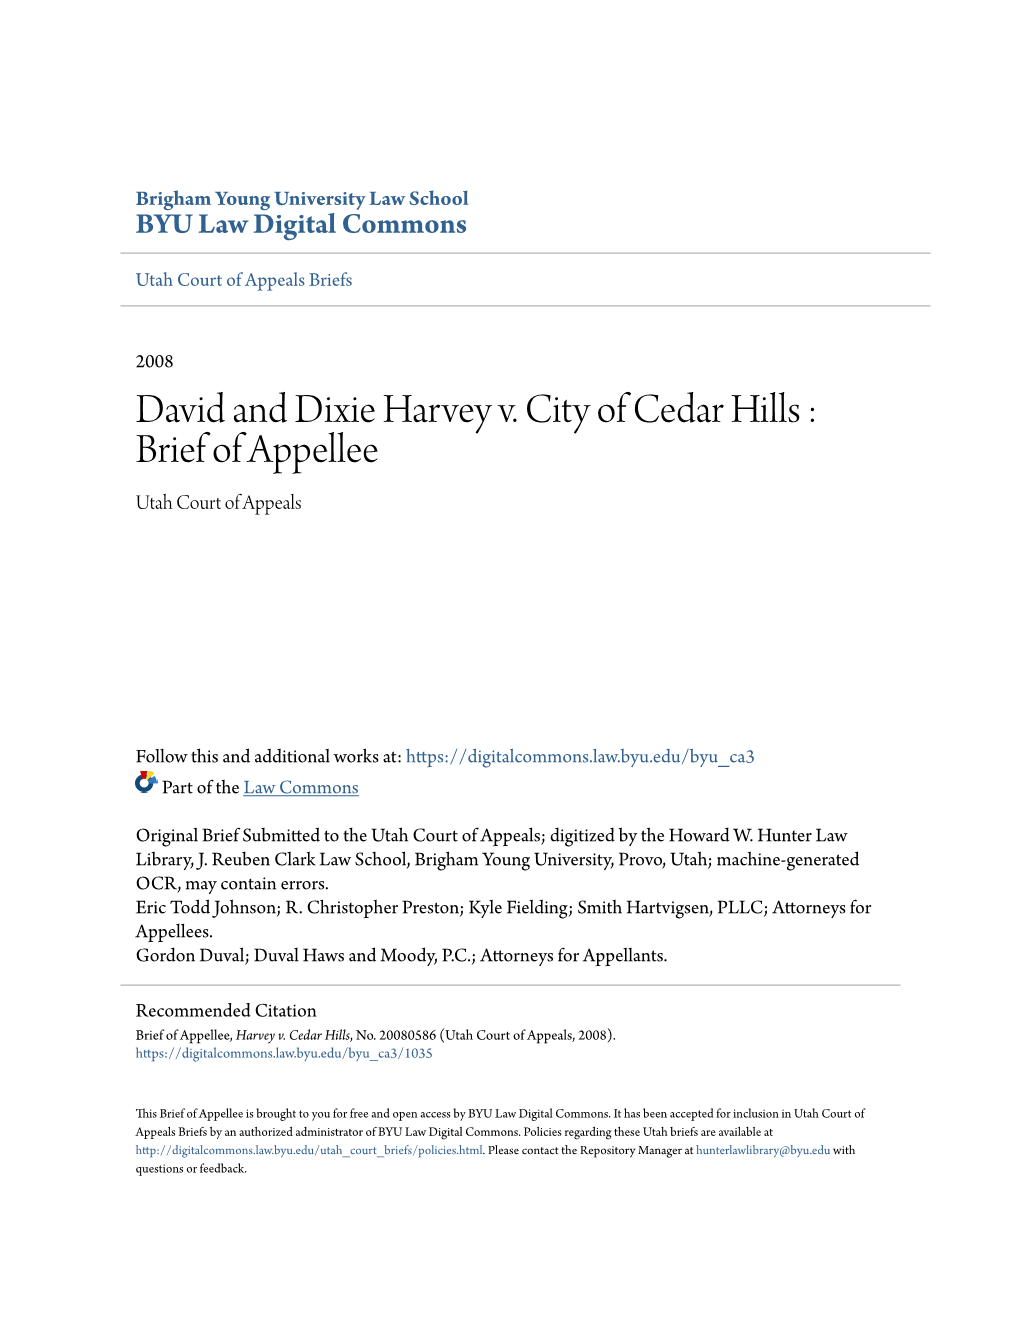 David and Dixie Harvey V. City of Cedar Hills : Brief of Appellee Utah Court of Appeals